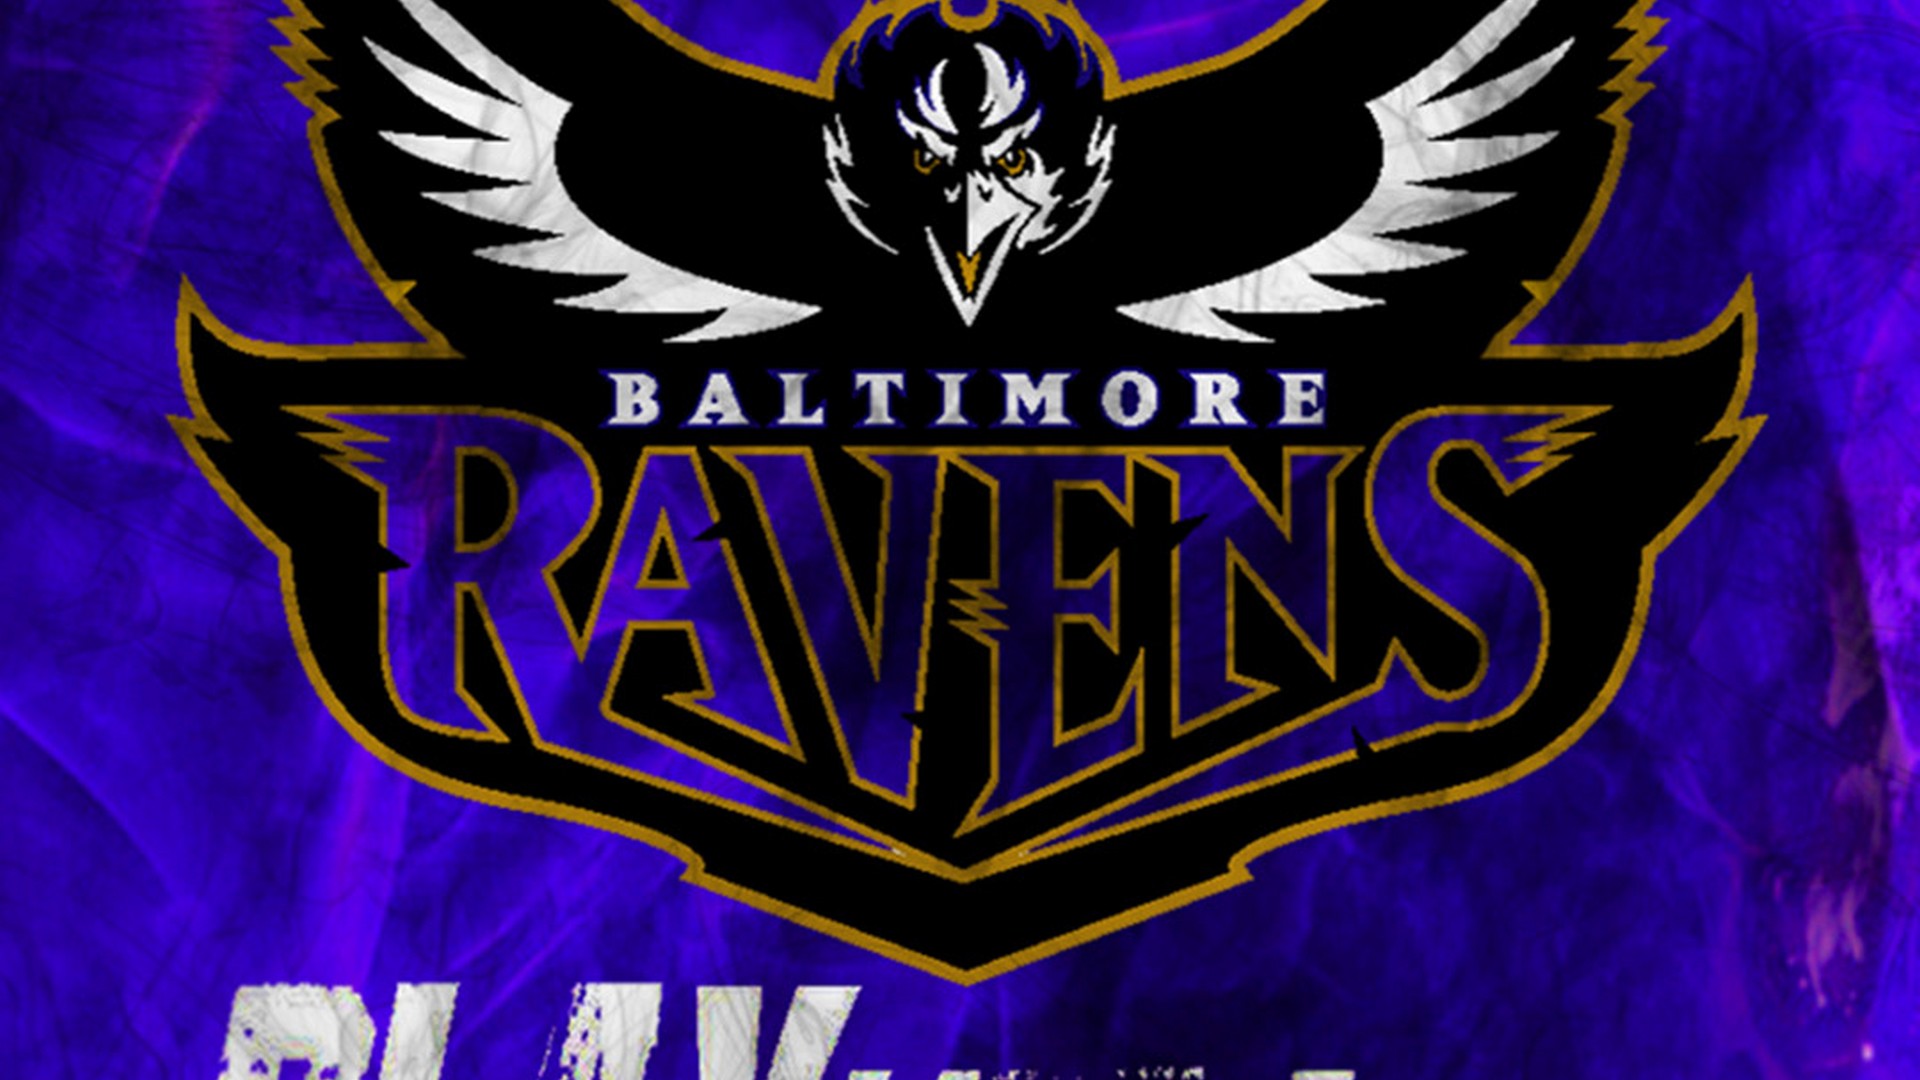 Hd Baltimore Ravens Backgrounds - HD Wallpaper 